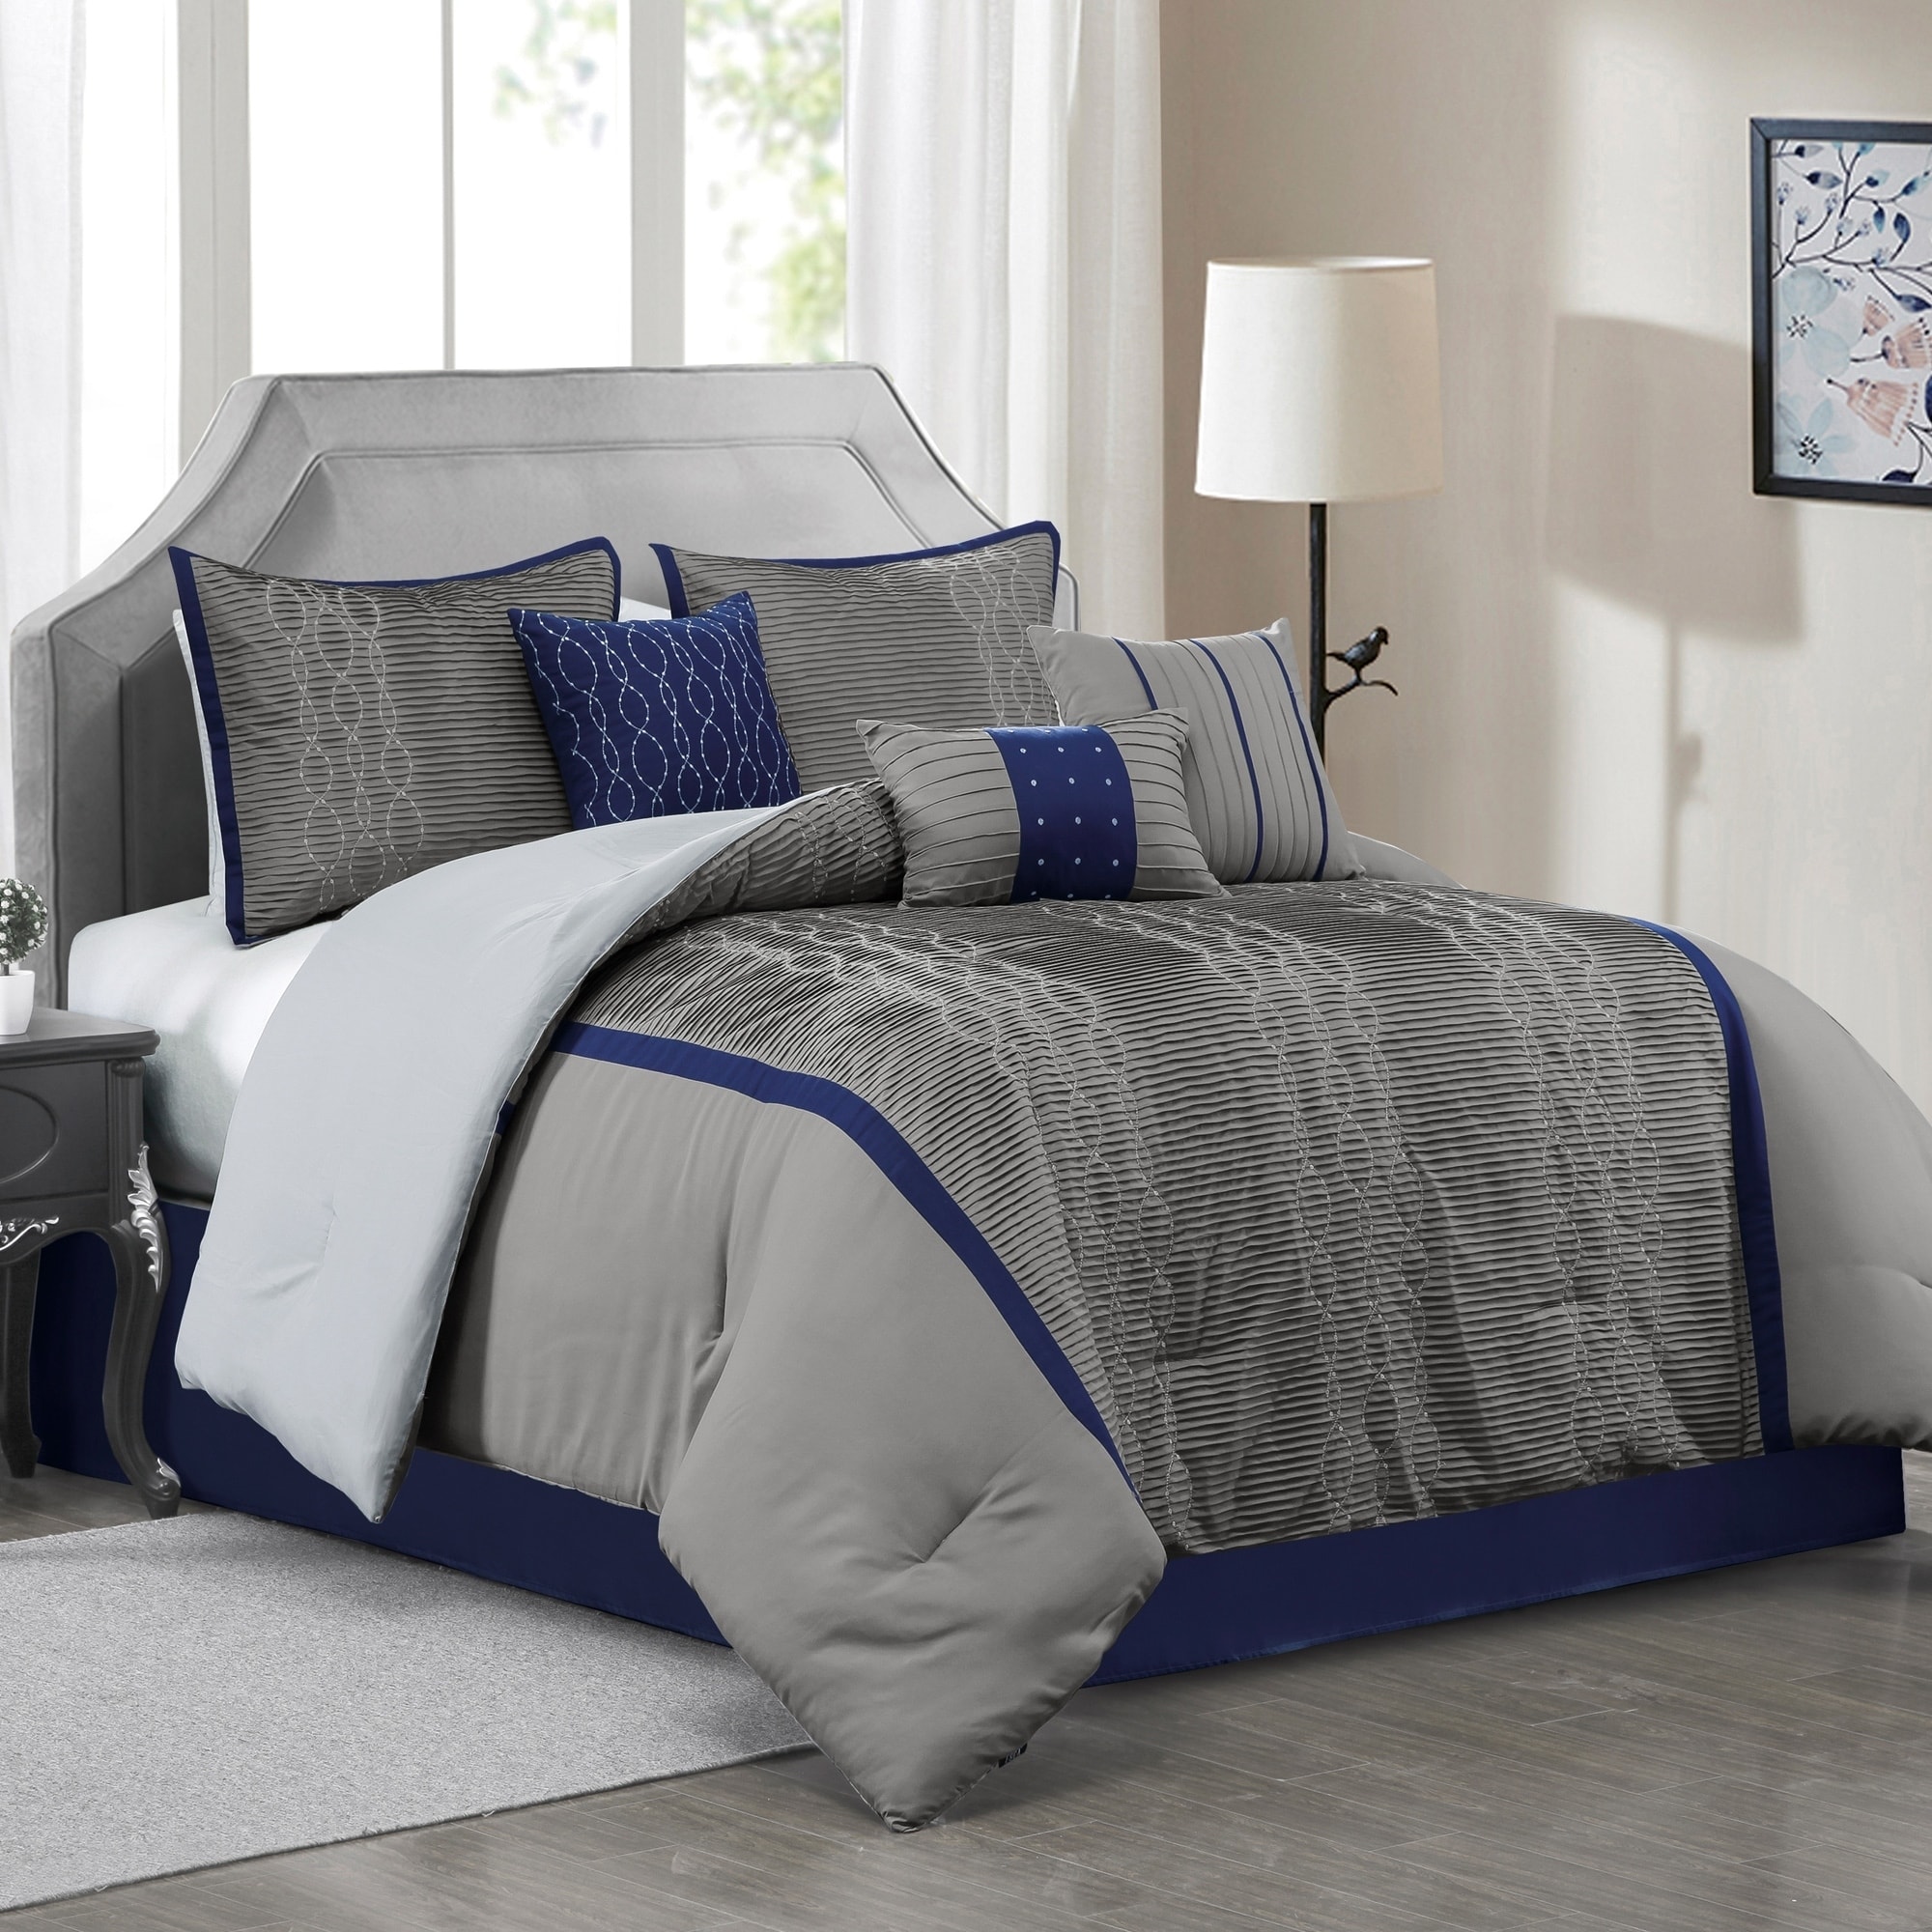 grey and blue comforter sets